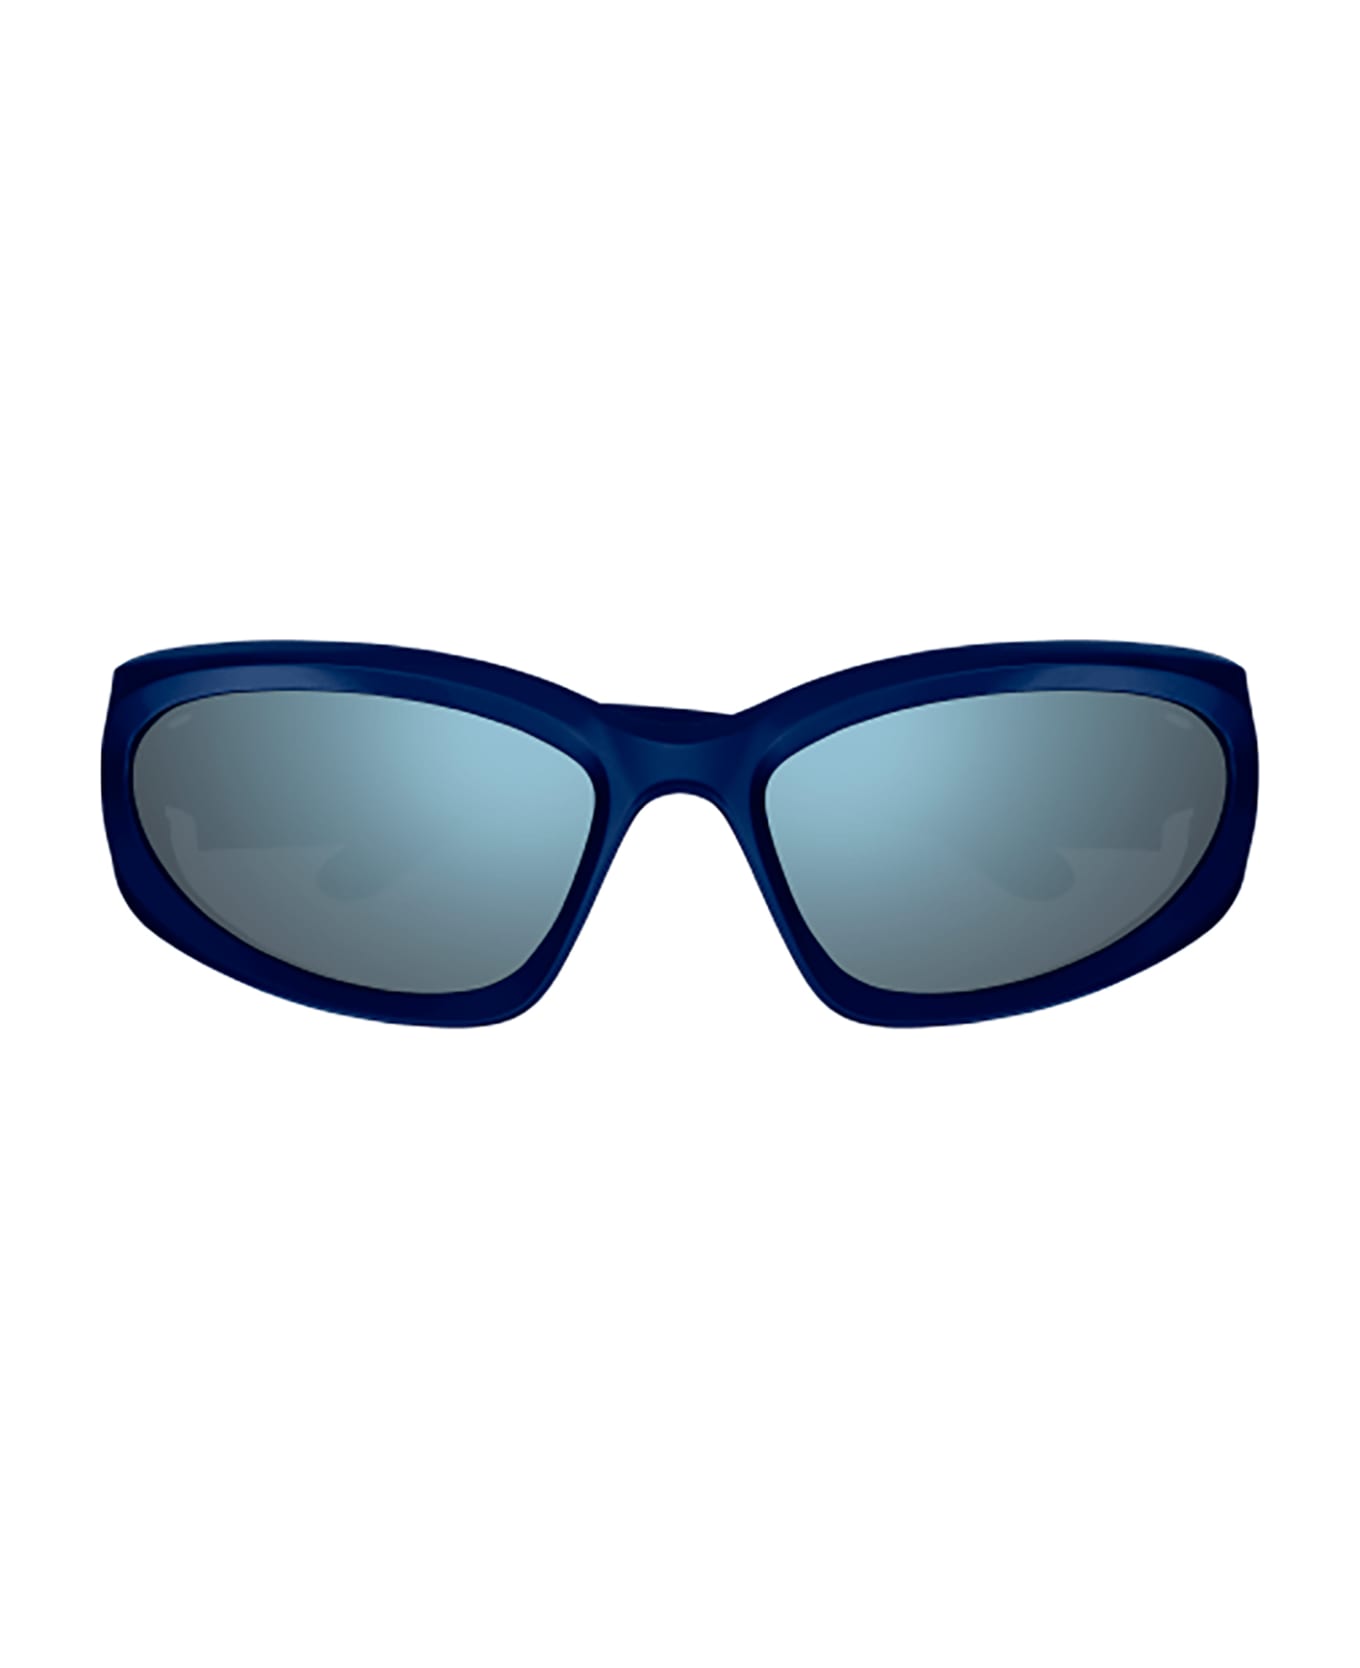 Balenciaga Eyewear Bb0157s Sunglasses - 009 blue blue blue